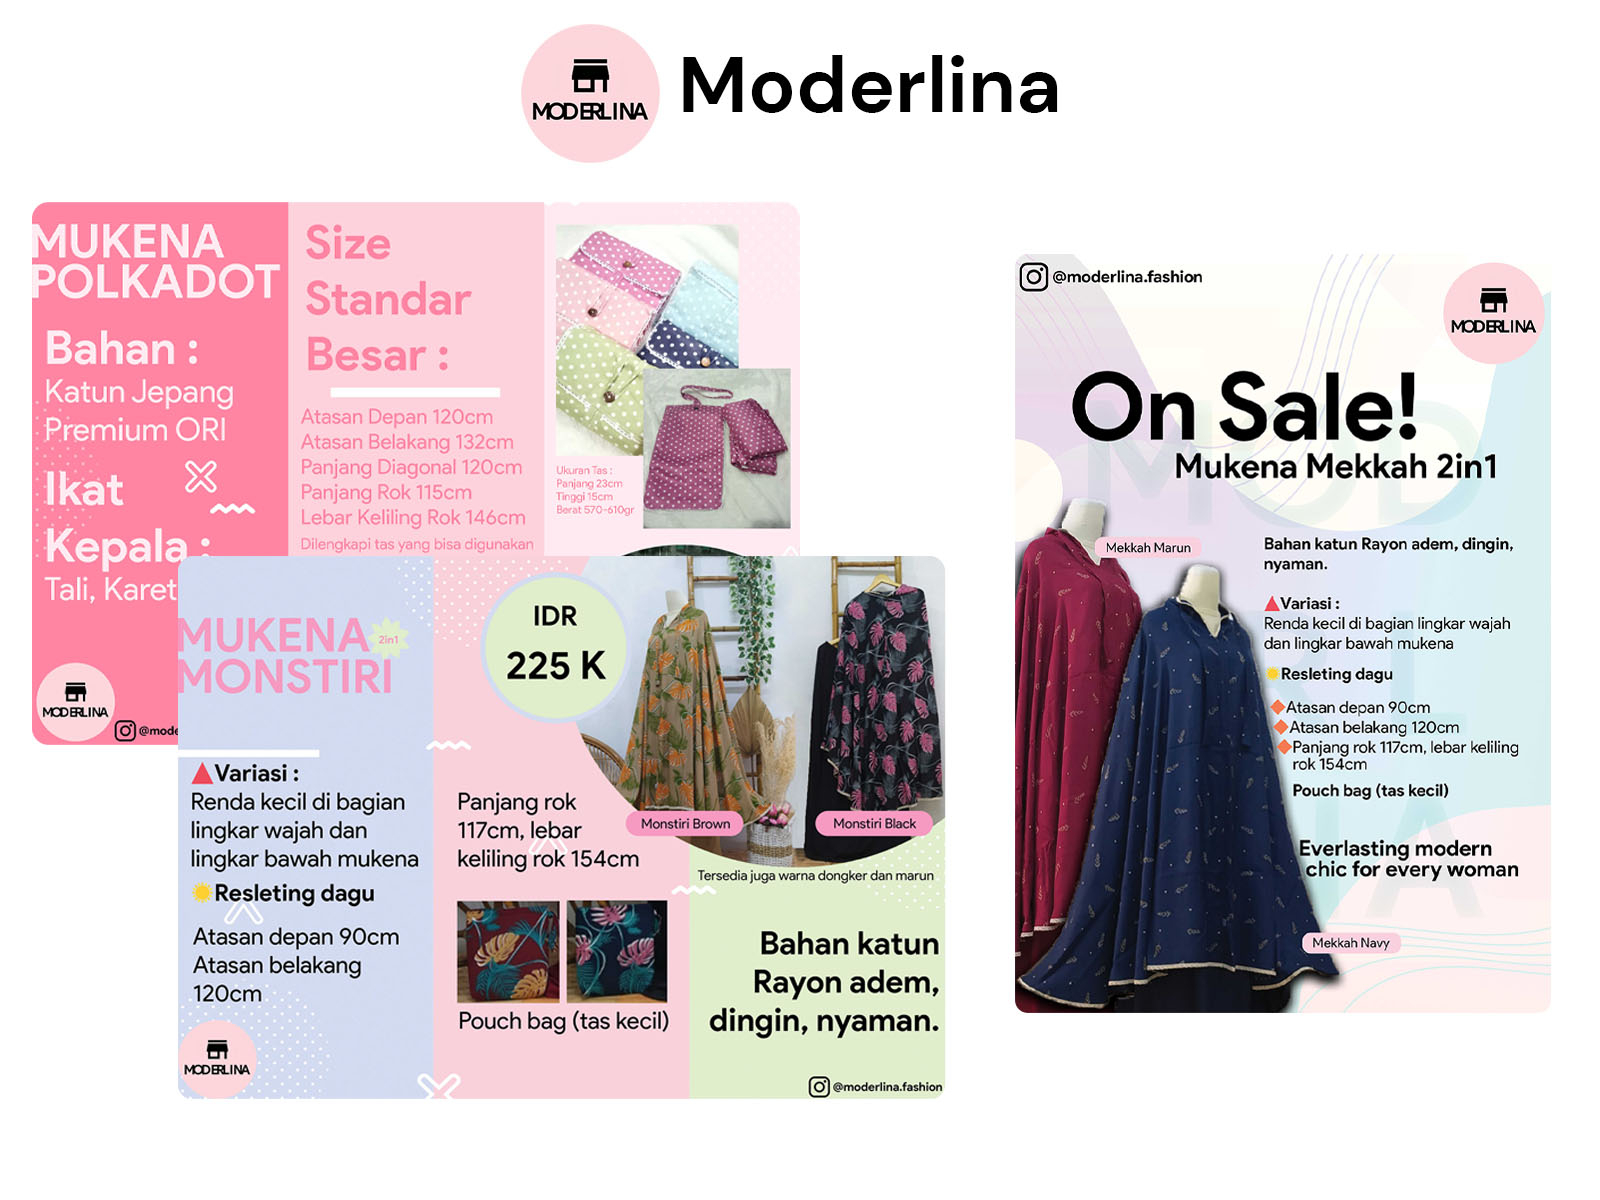 Moderlina brand overview by Dhimas Ilya'sa Swandy on Dribbble